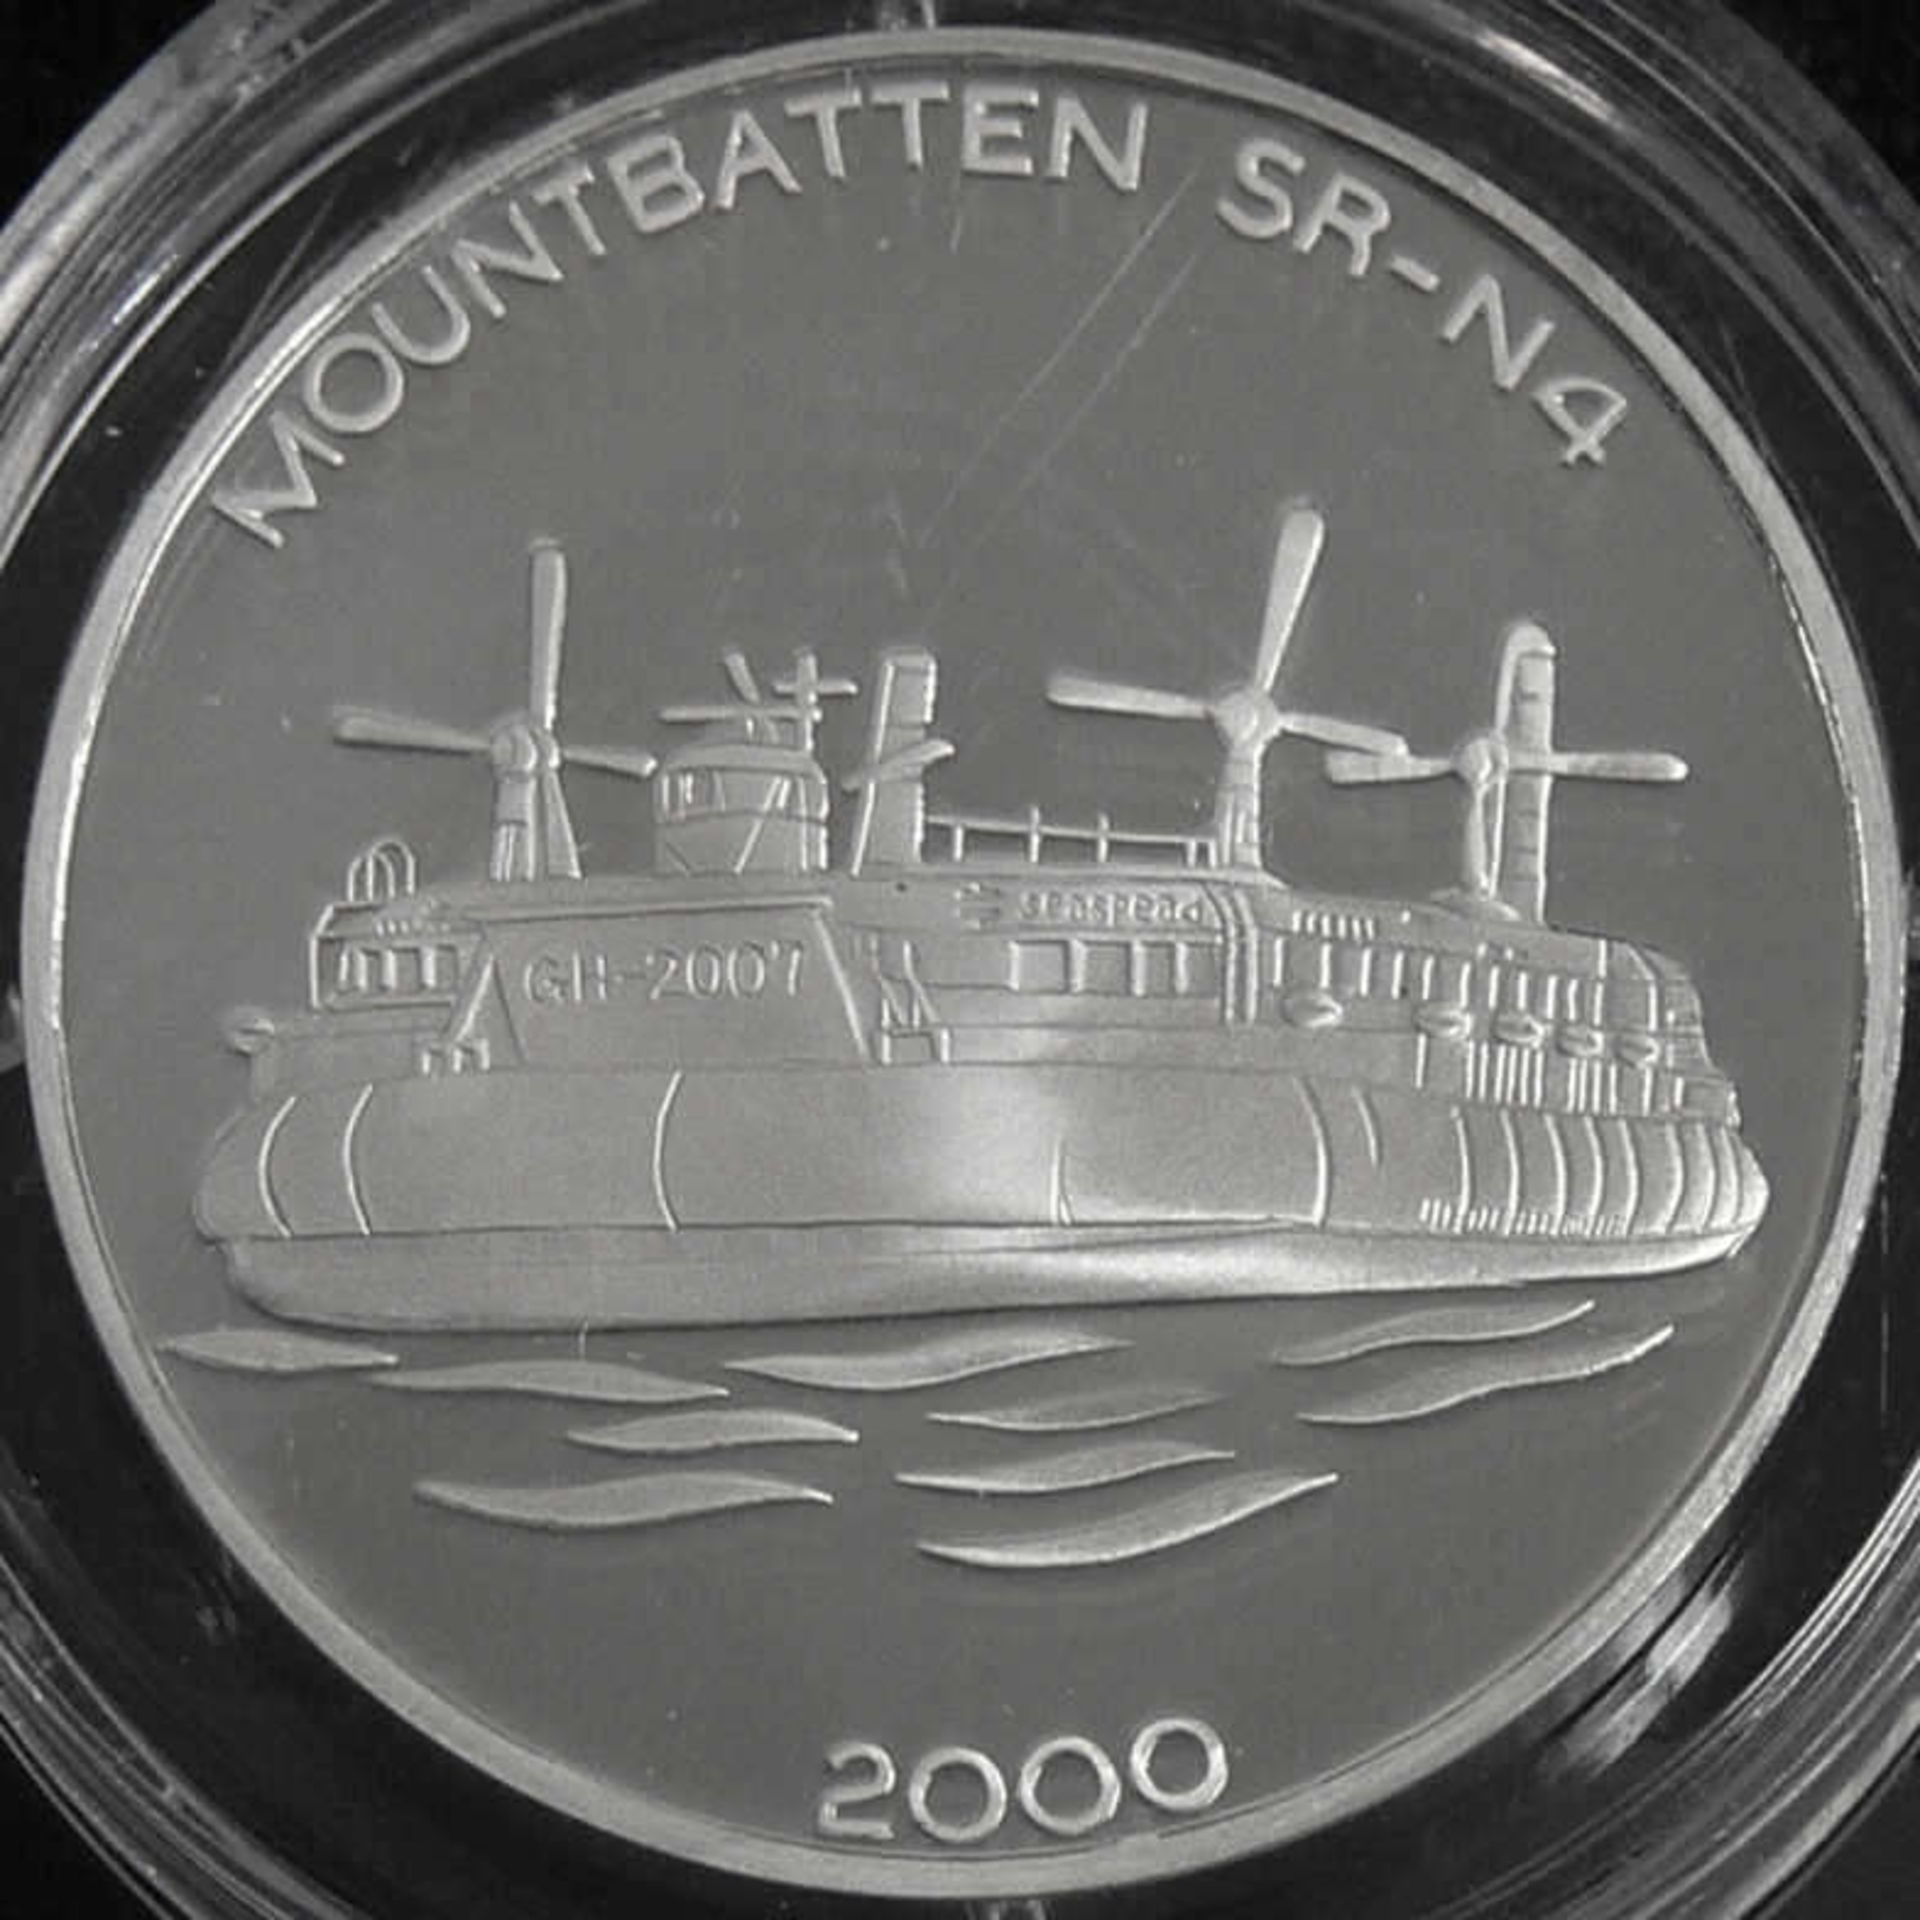 Nord - Korea 2000, 5 Won - Silbermünze "Mountbatten SR-N4". Silber 999, Gewicht: 15 g. In Kapsel.